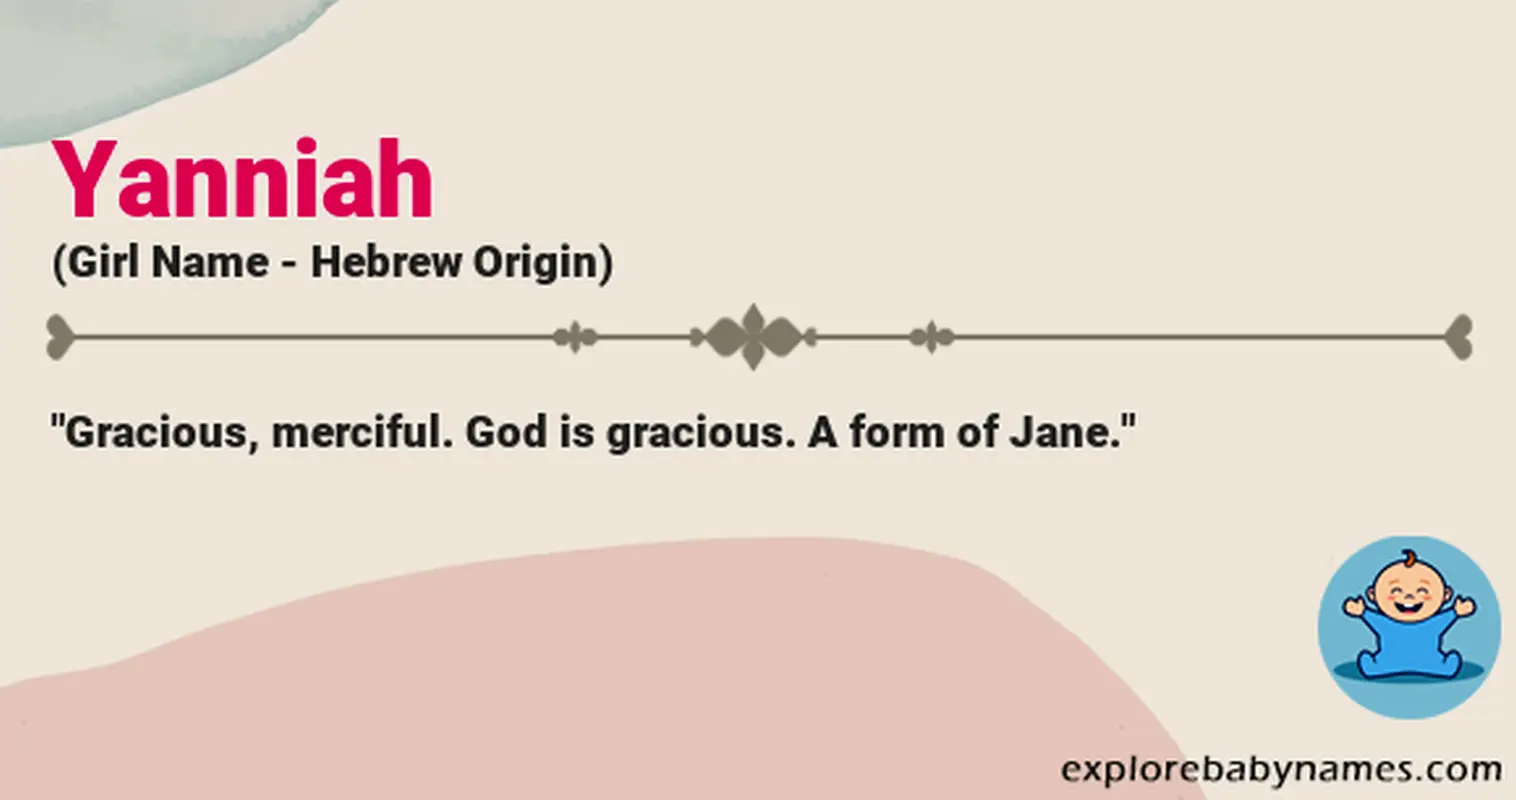 Meaning of Yanniah